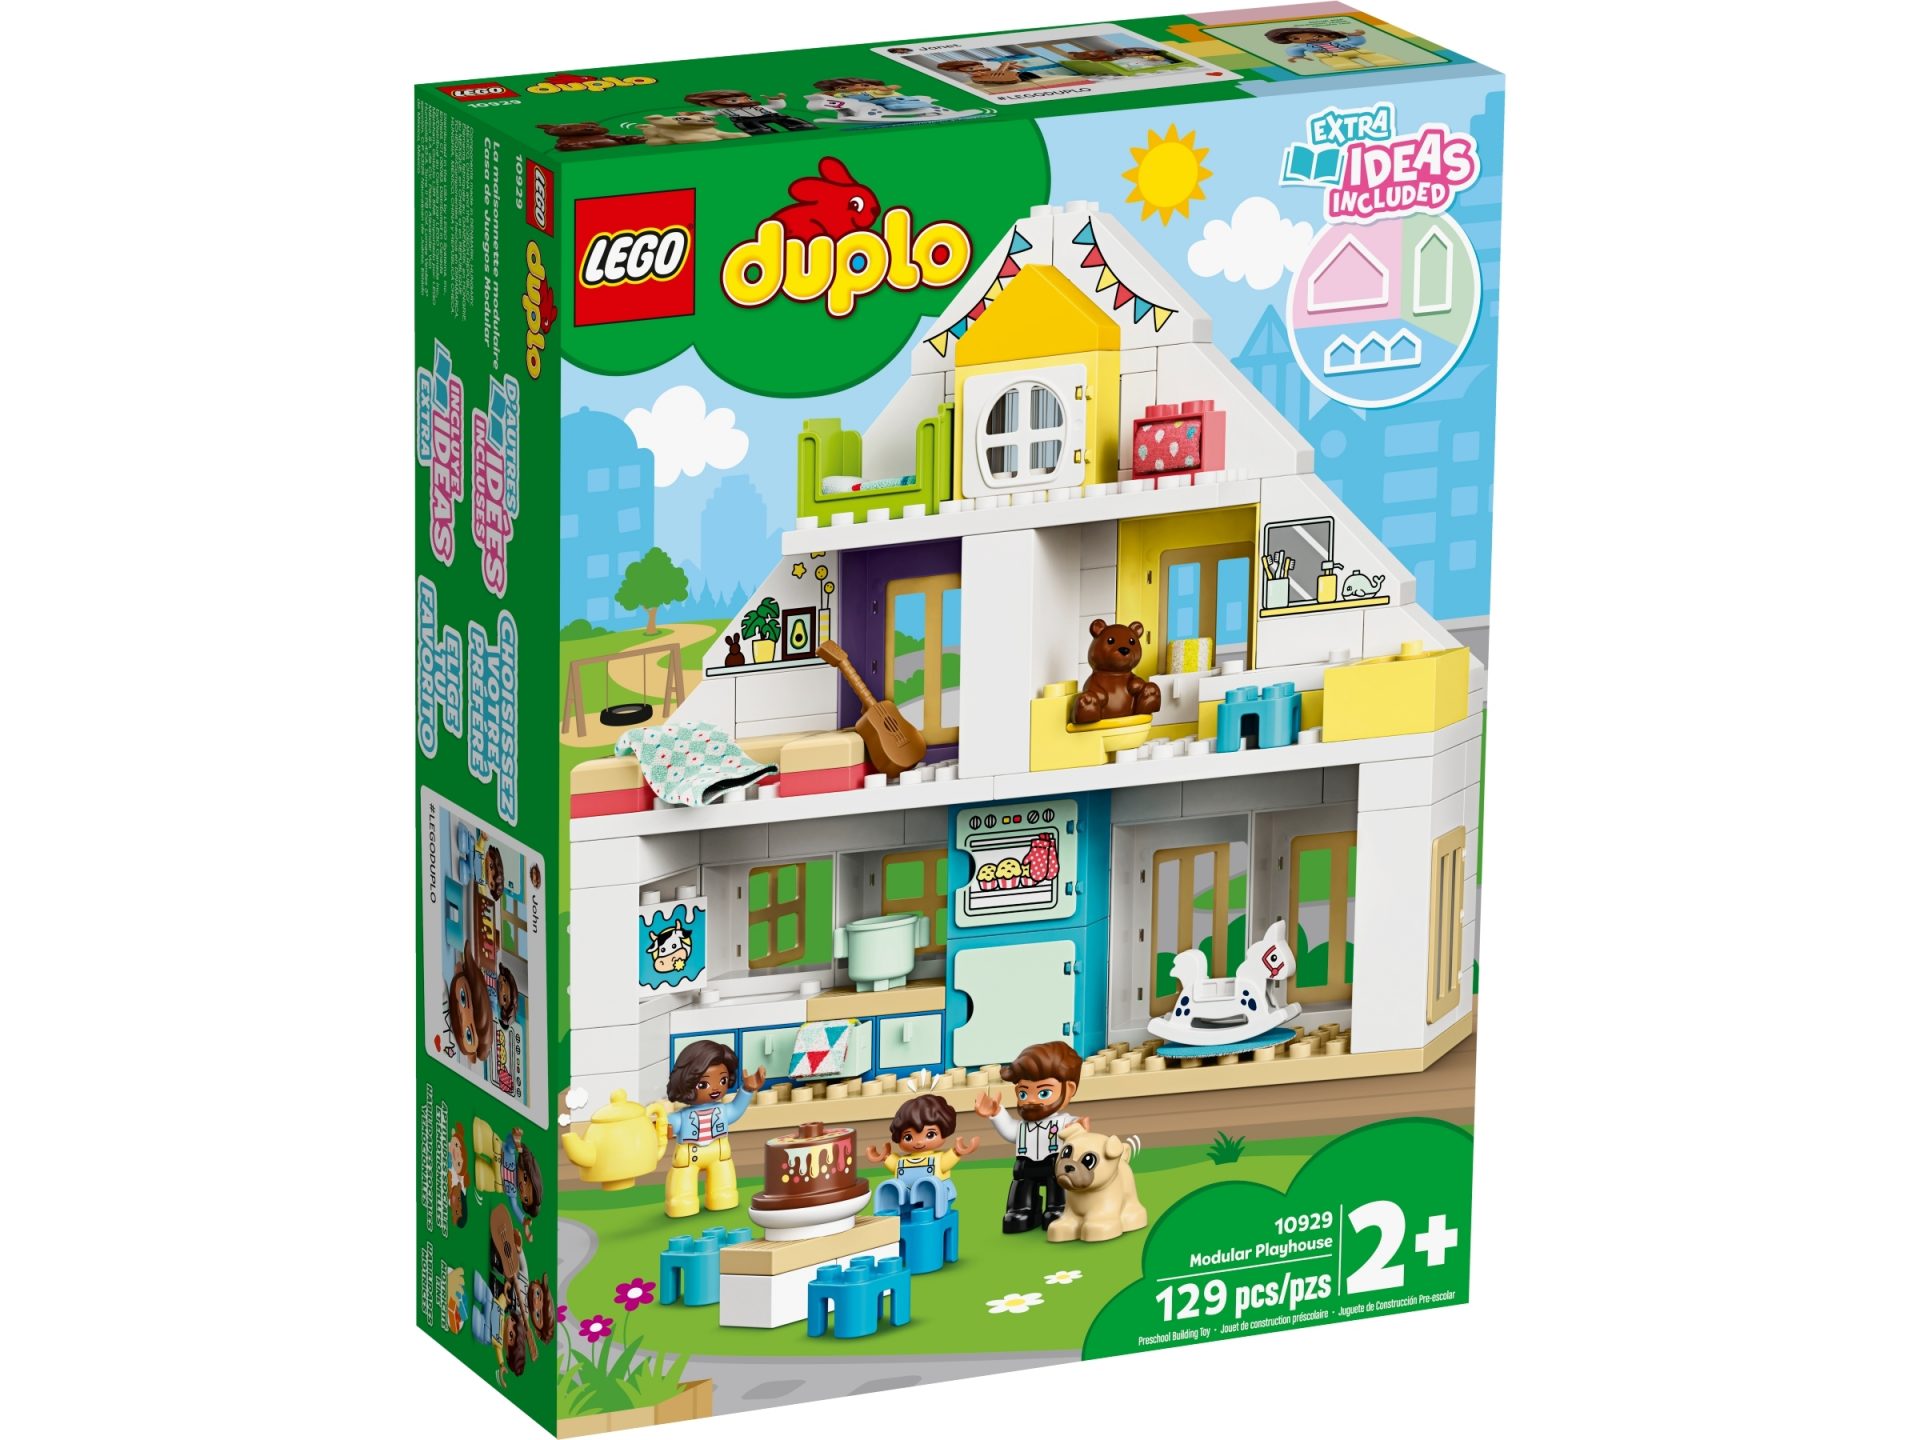 Mentality visitor activity Lego- Duplo 10929 Modular Playhouse - Teton Toys